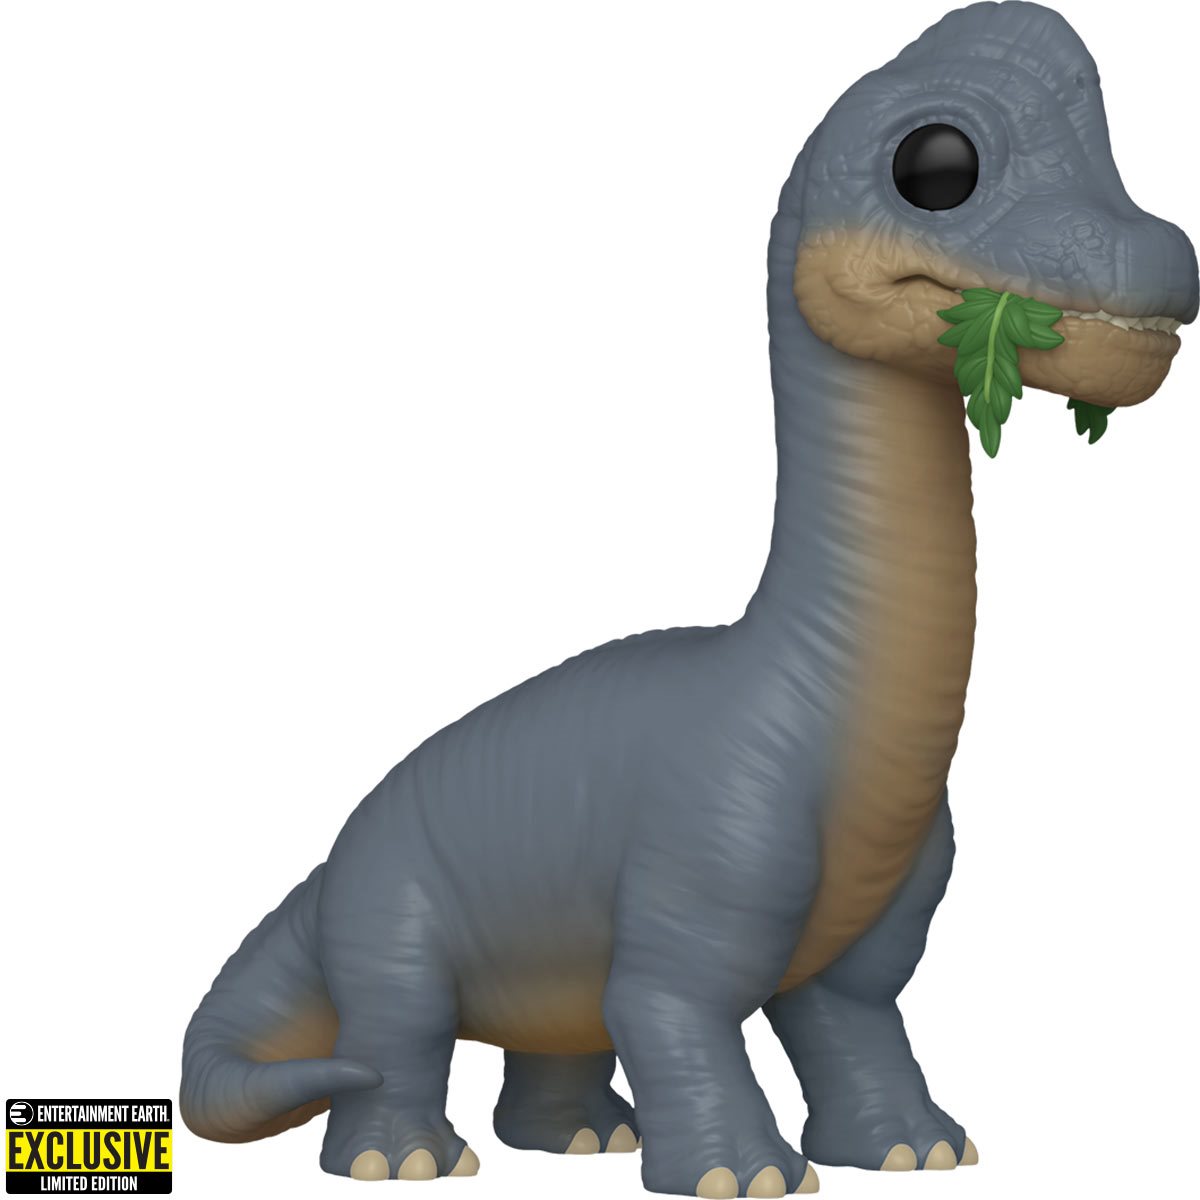 POP! Jurassic Park: Brachiosaurus Super 6-Inch